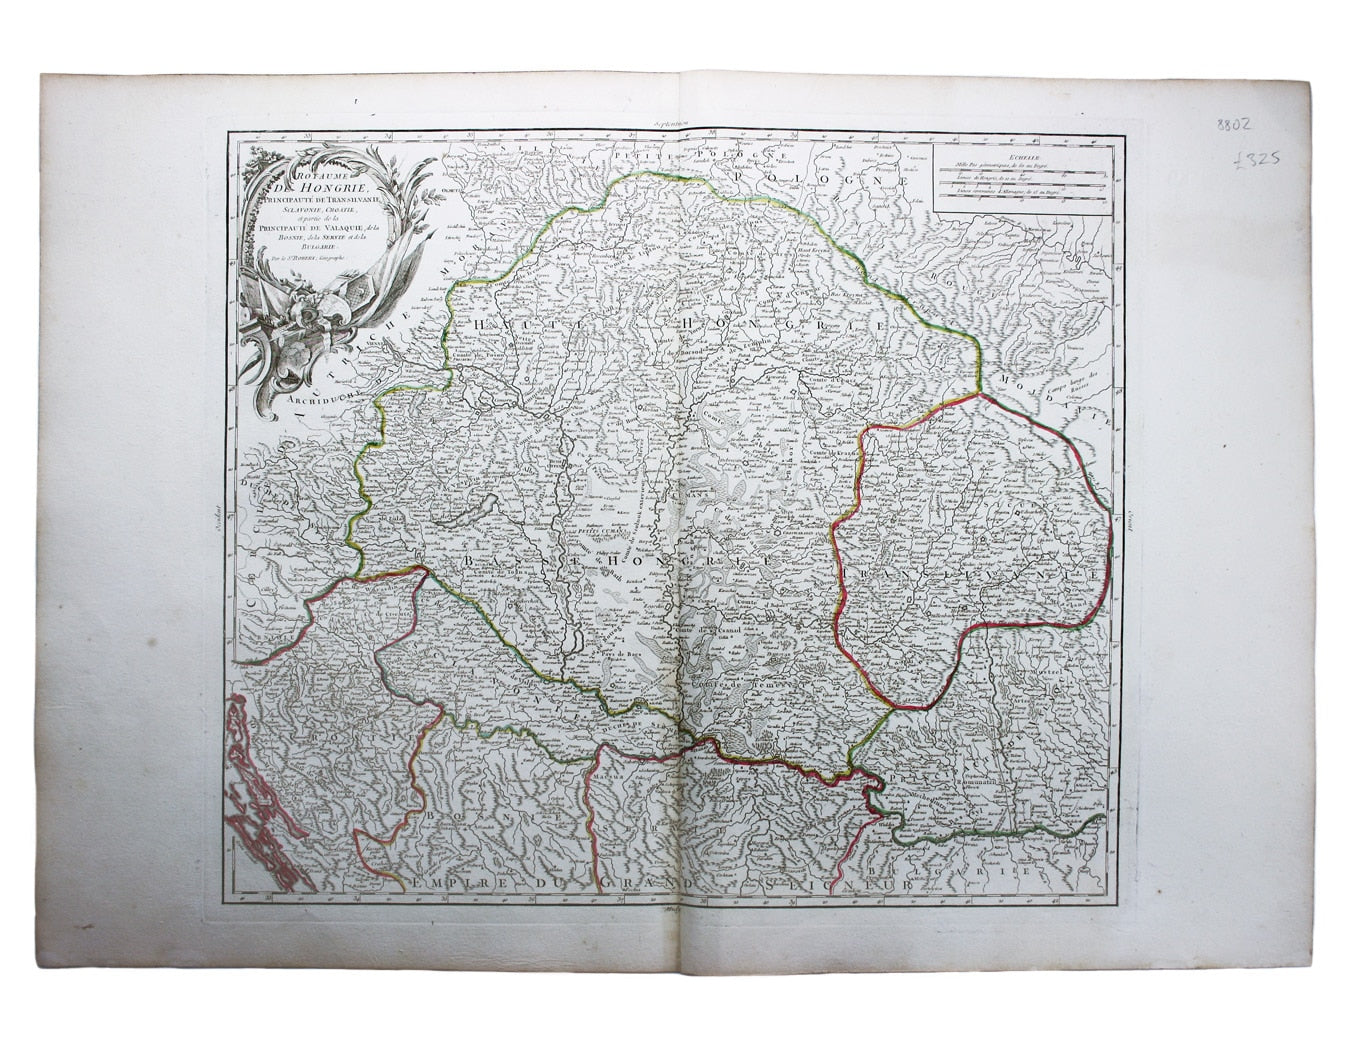 Robert de Vaugondy’s Map of Hungary & Southeastern Europe